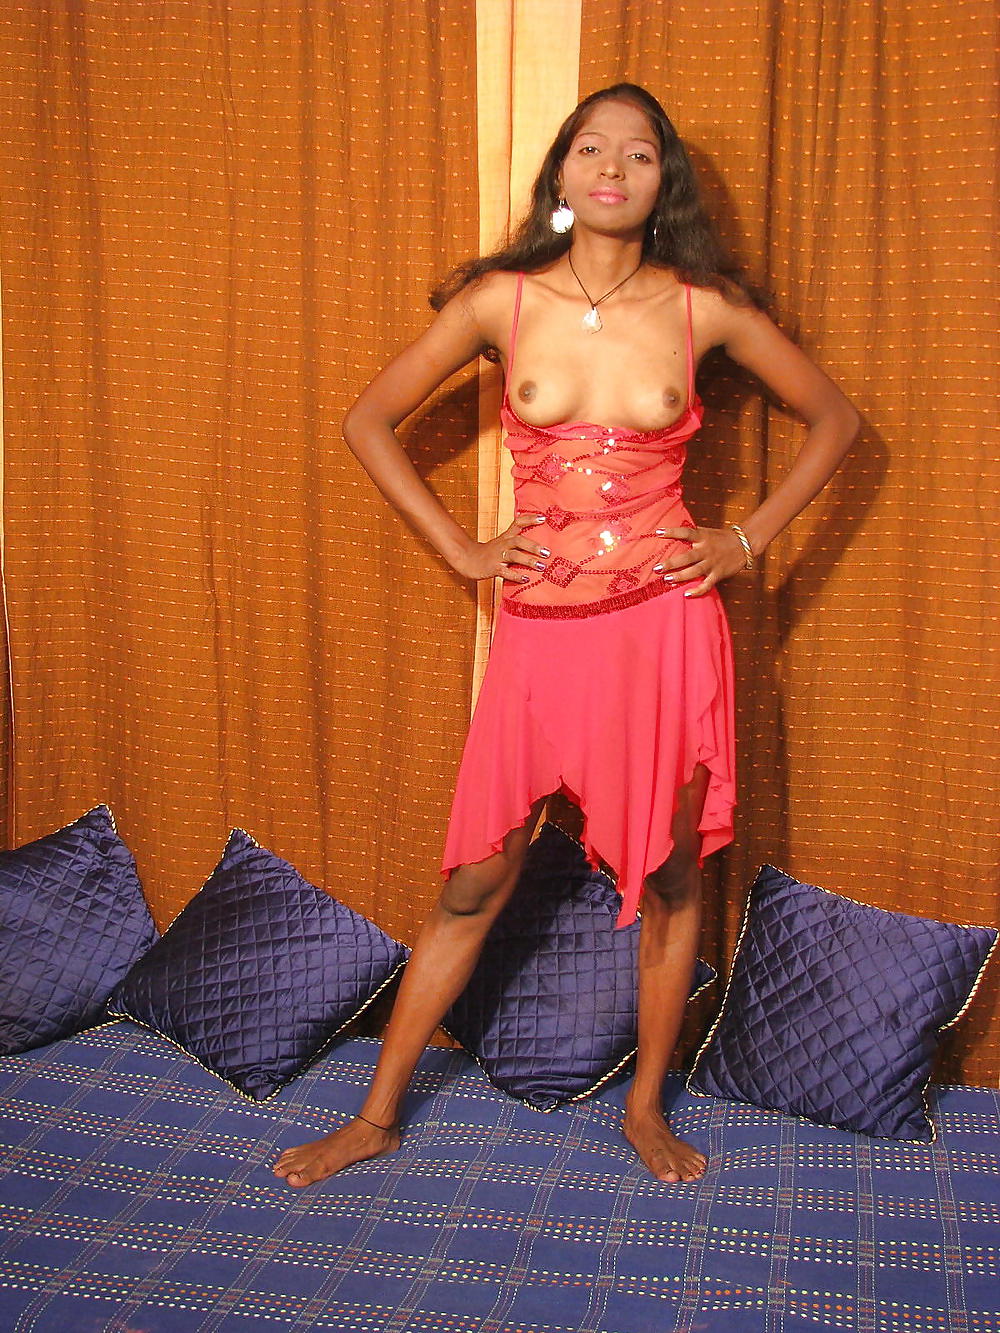 Desi Bala Chaud Et Sexy - Hardcore Indien #24978257